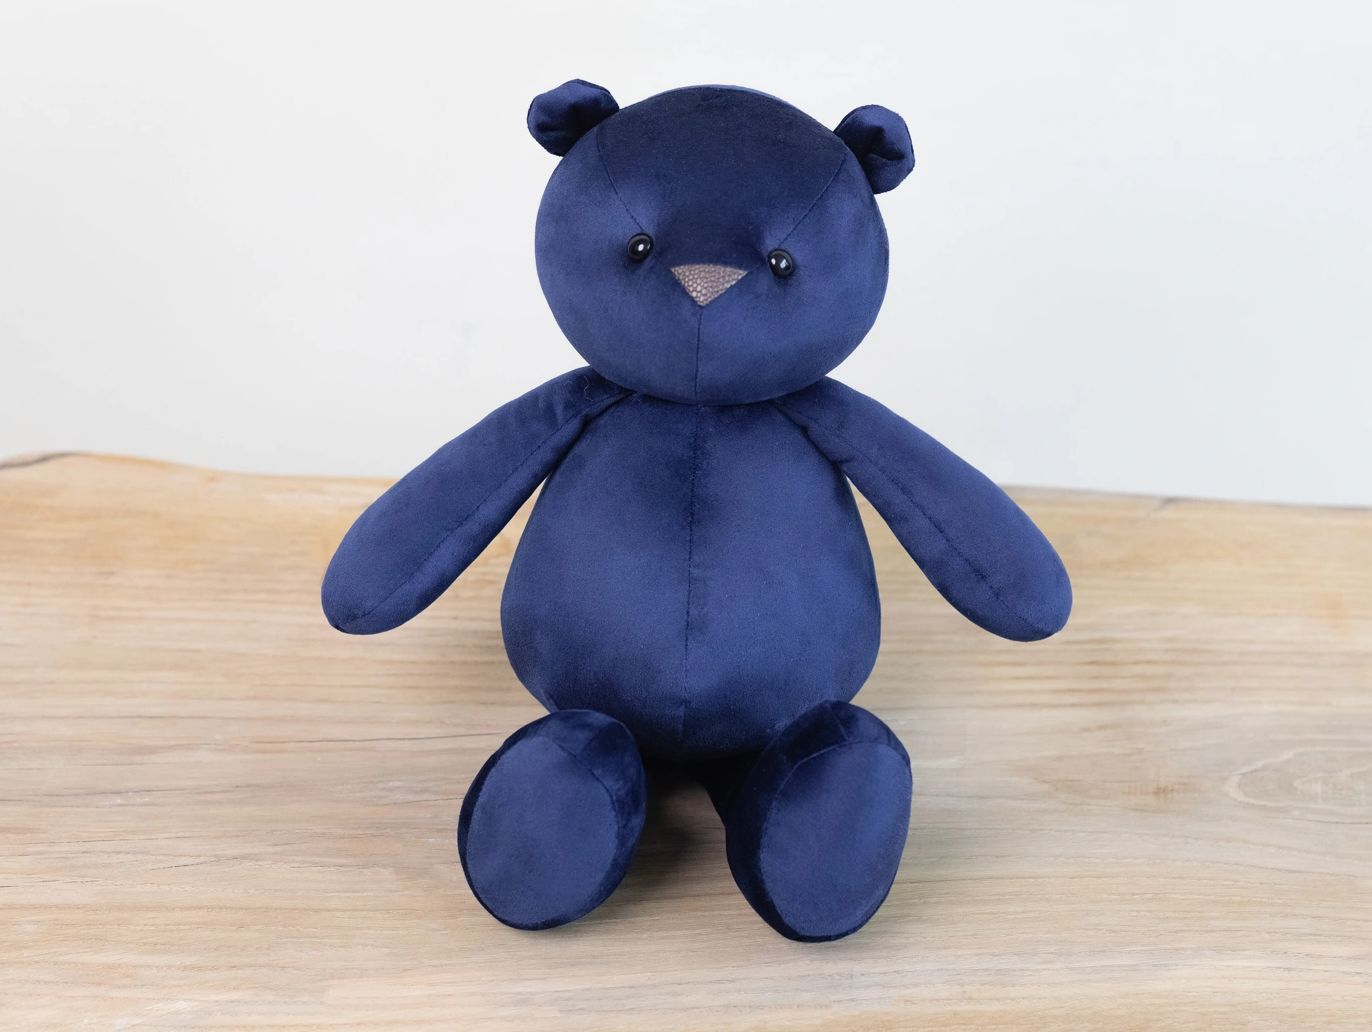 Royal blue teddy bear